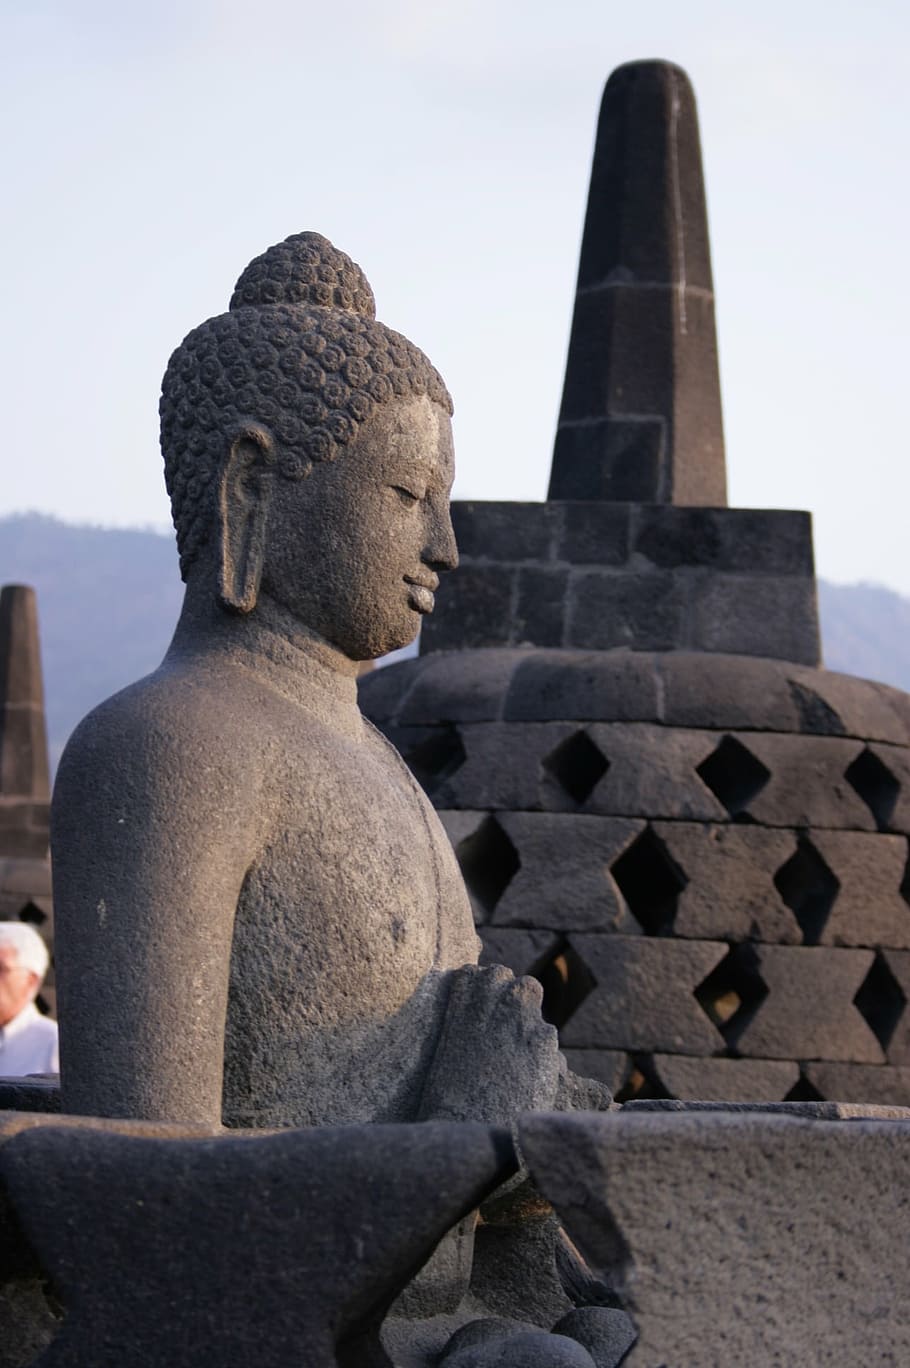 budha, stupa, borobudur, java temple, culture, spiritual, religion, center of java, buddhism, buddha